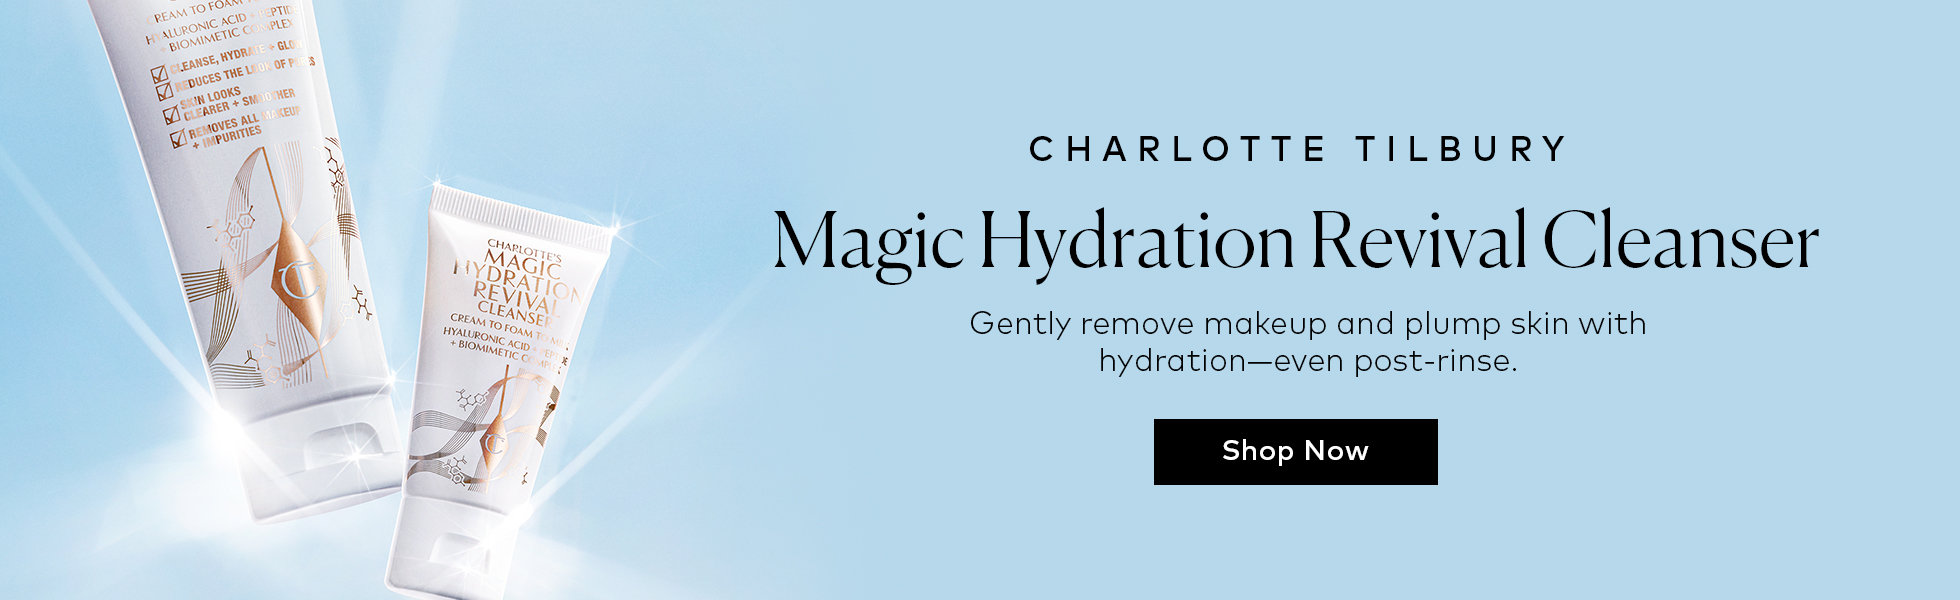 Shop the Charlotte Tilbury Charlotte's Magic Hydration Revival Cleanser on Beautylish.com! 